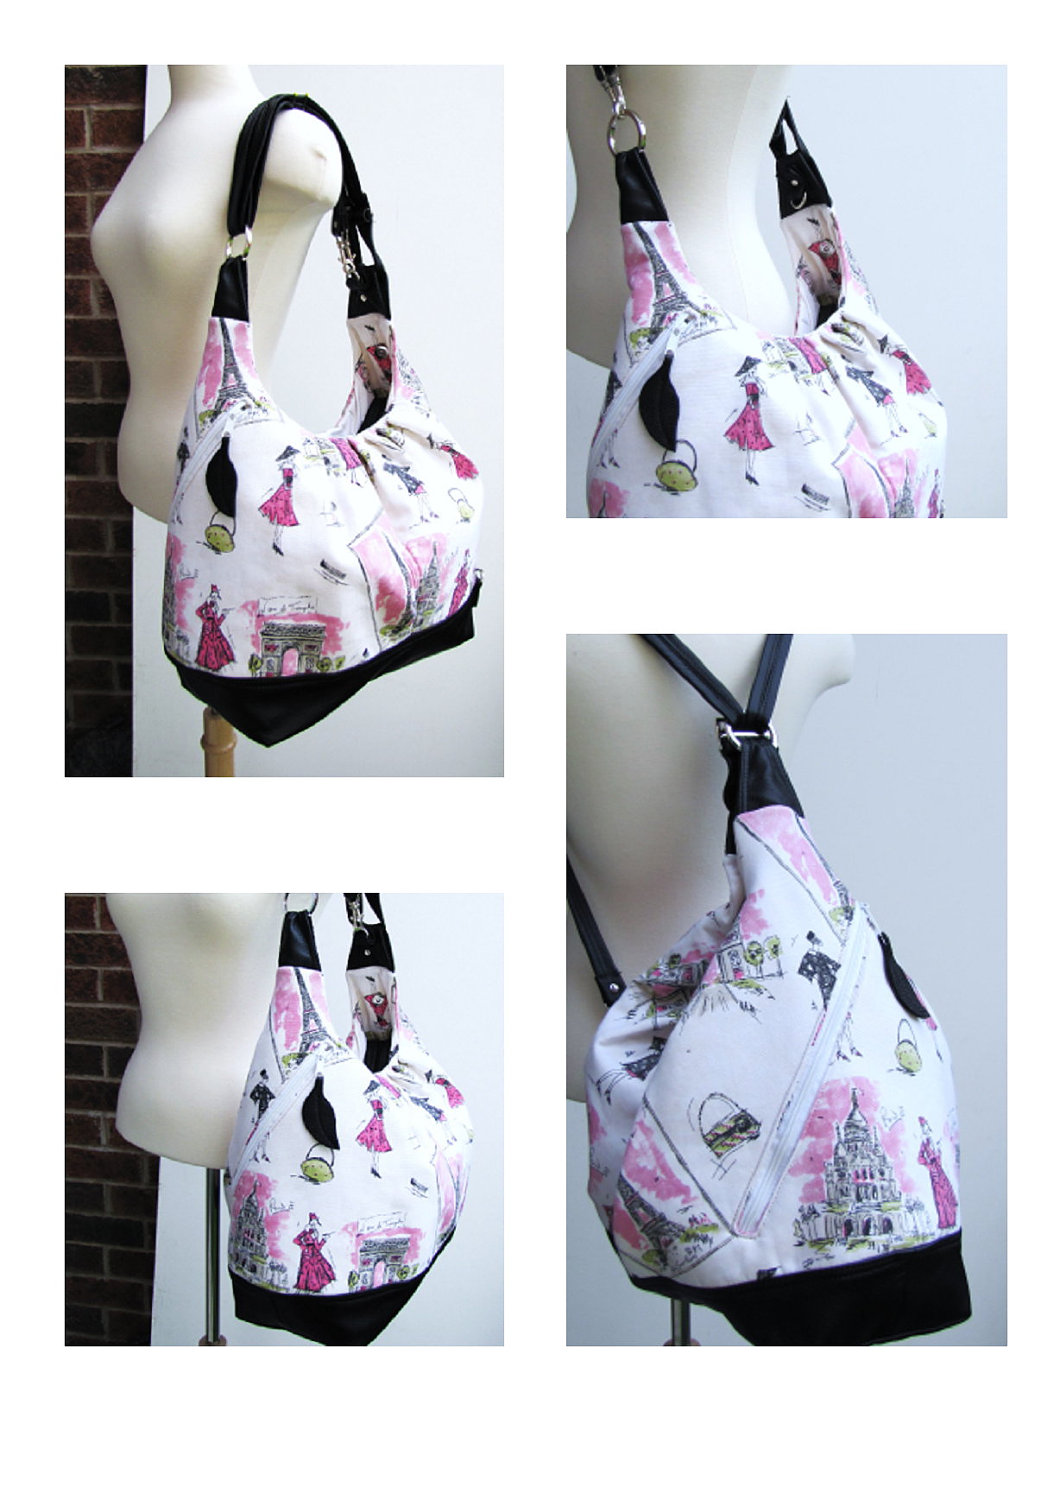 Extra large pink cotton bag with leather straps, base, zipper top closure - Paris fashion prints